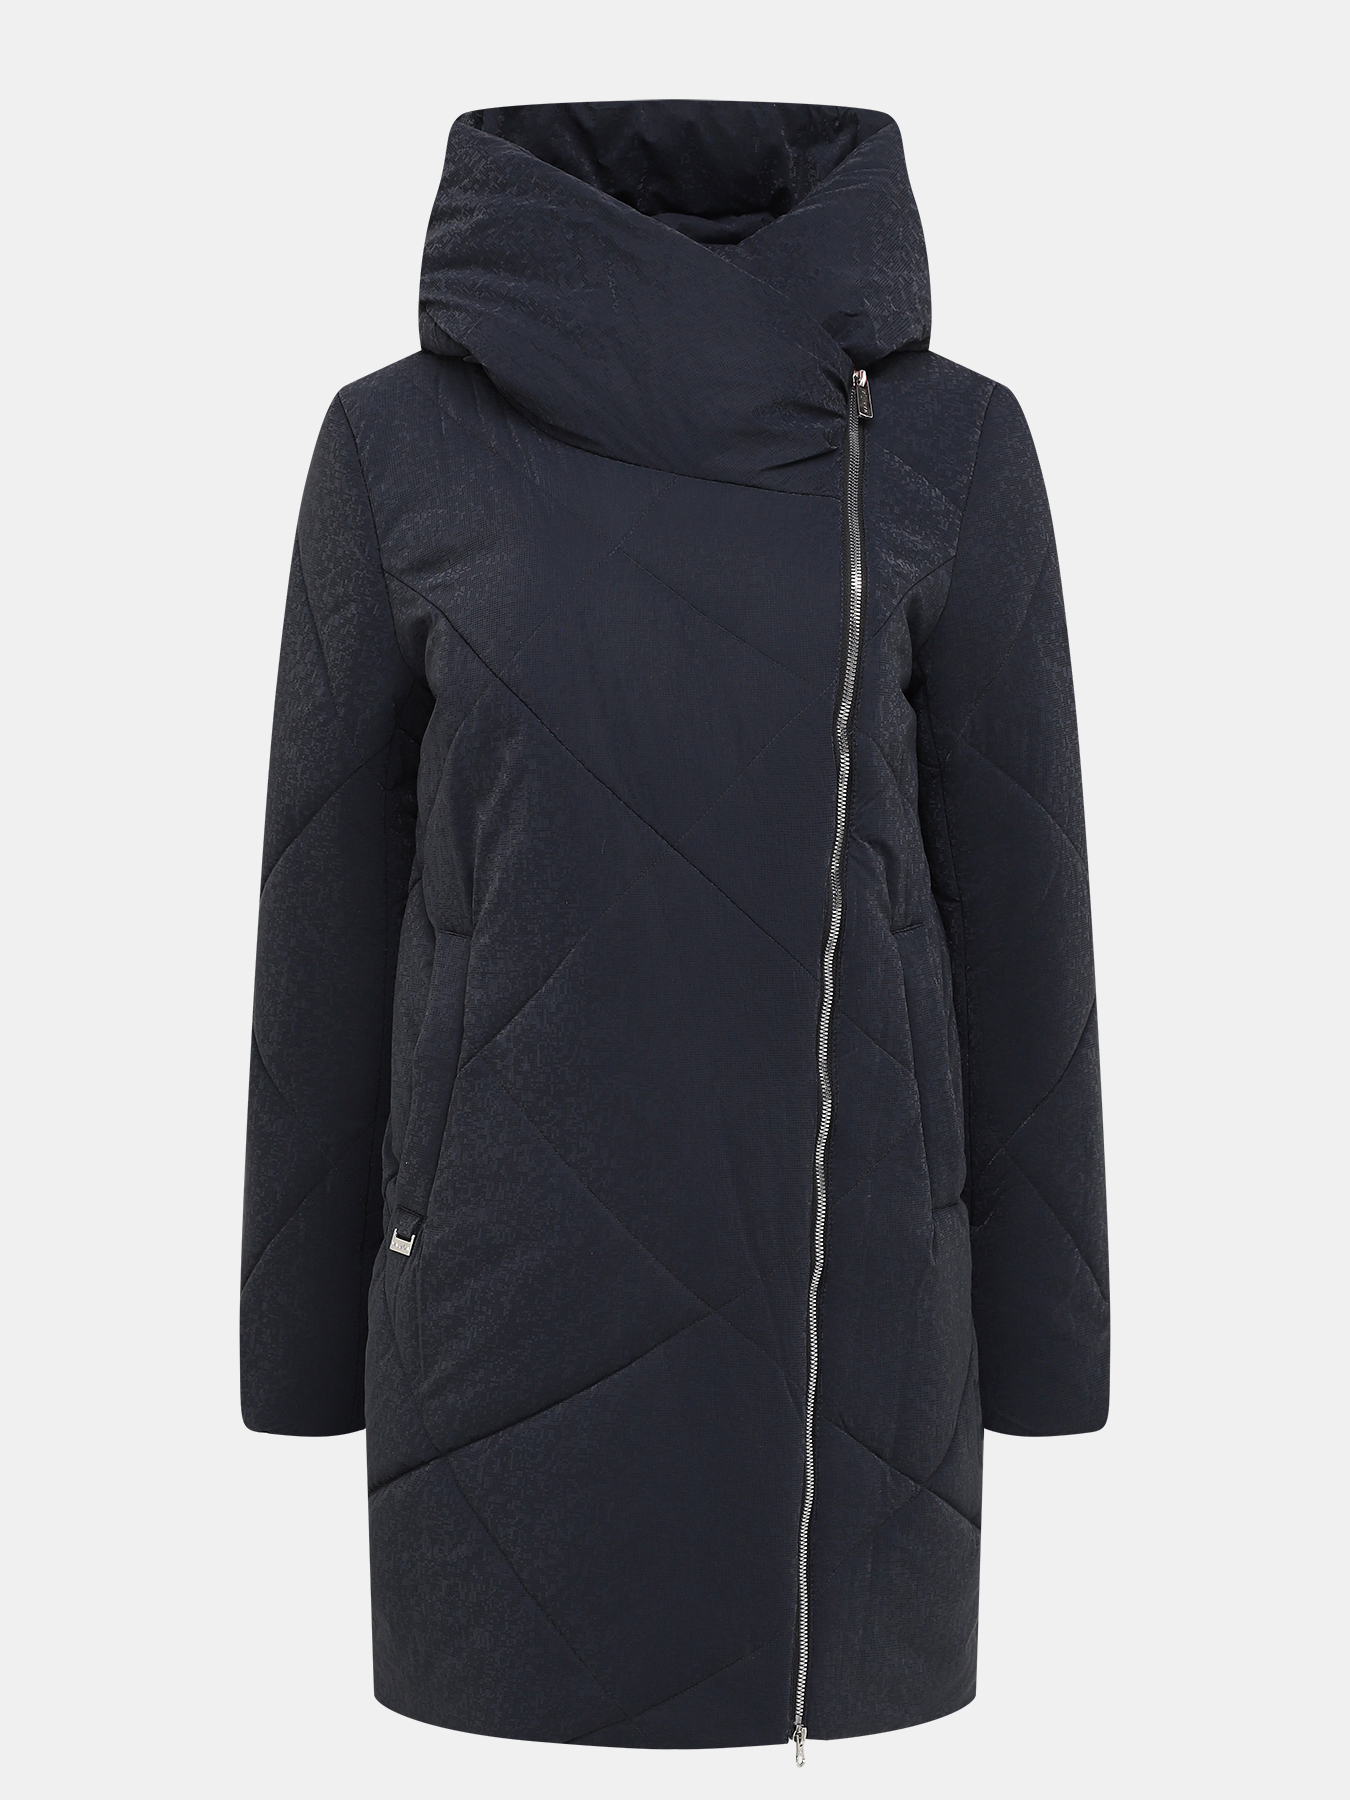 Пальто зимнее Maritta 433549-018, цвет темно-синий, размер 36